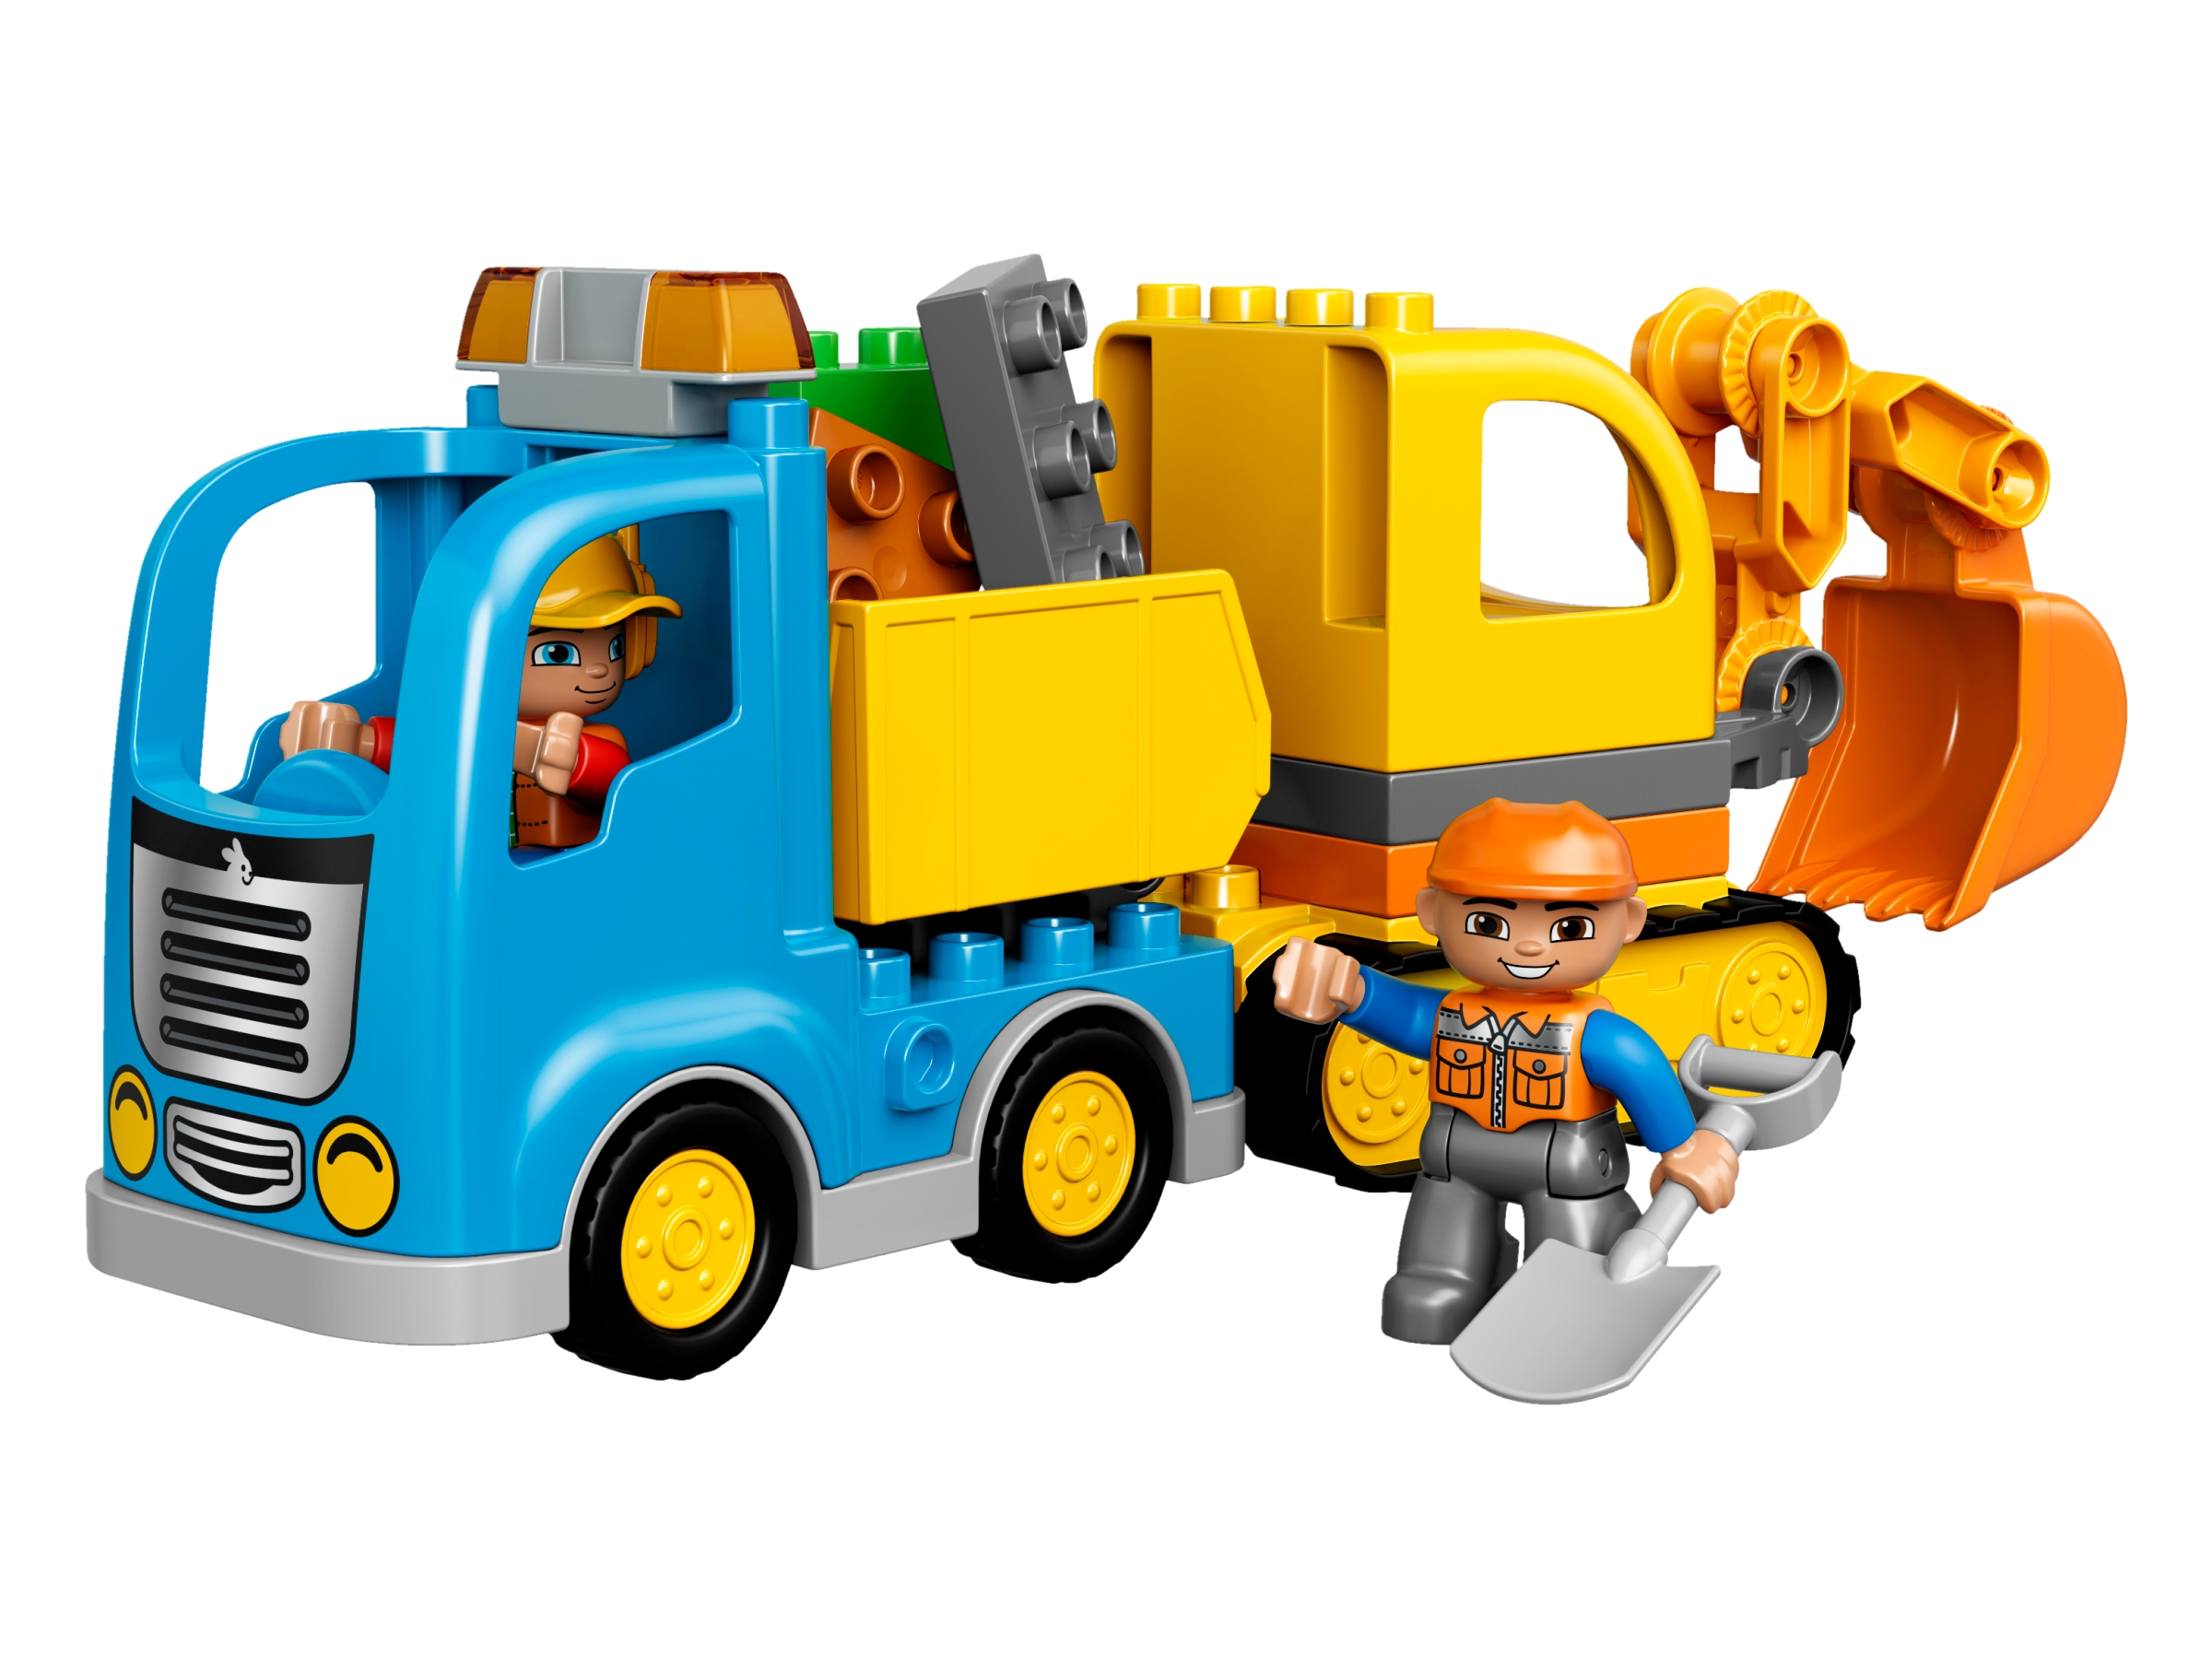 Truck & Excavator 10812 | DUPLO® | online at the Official LEGO® Shop DE